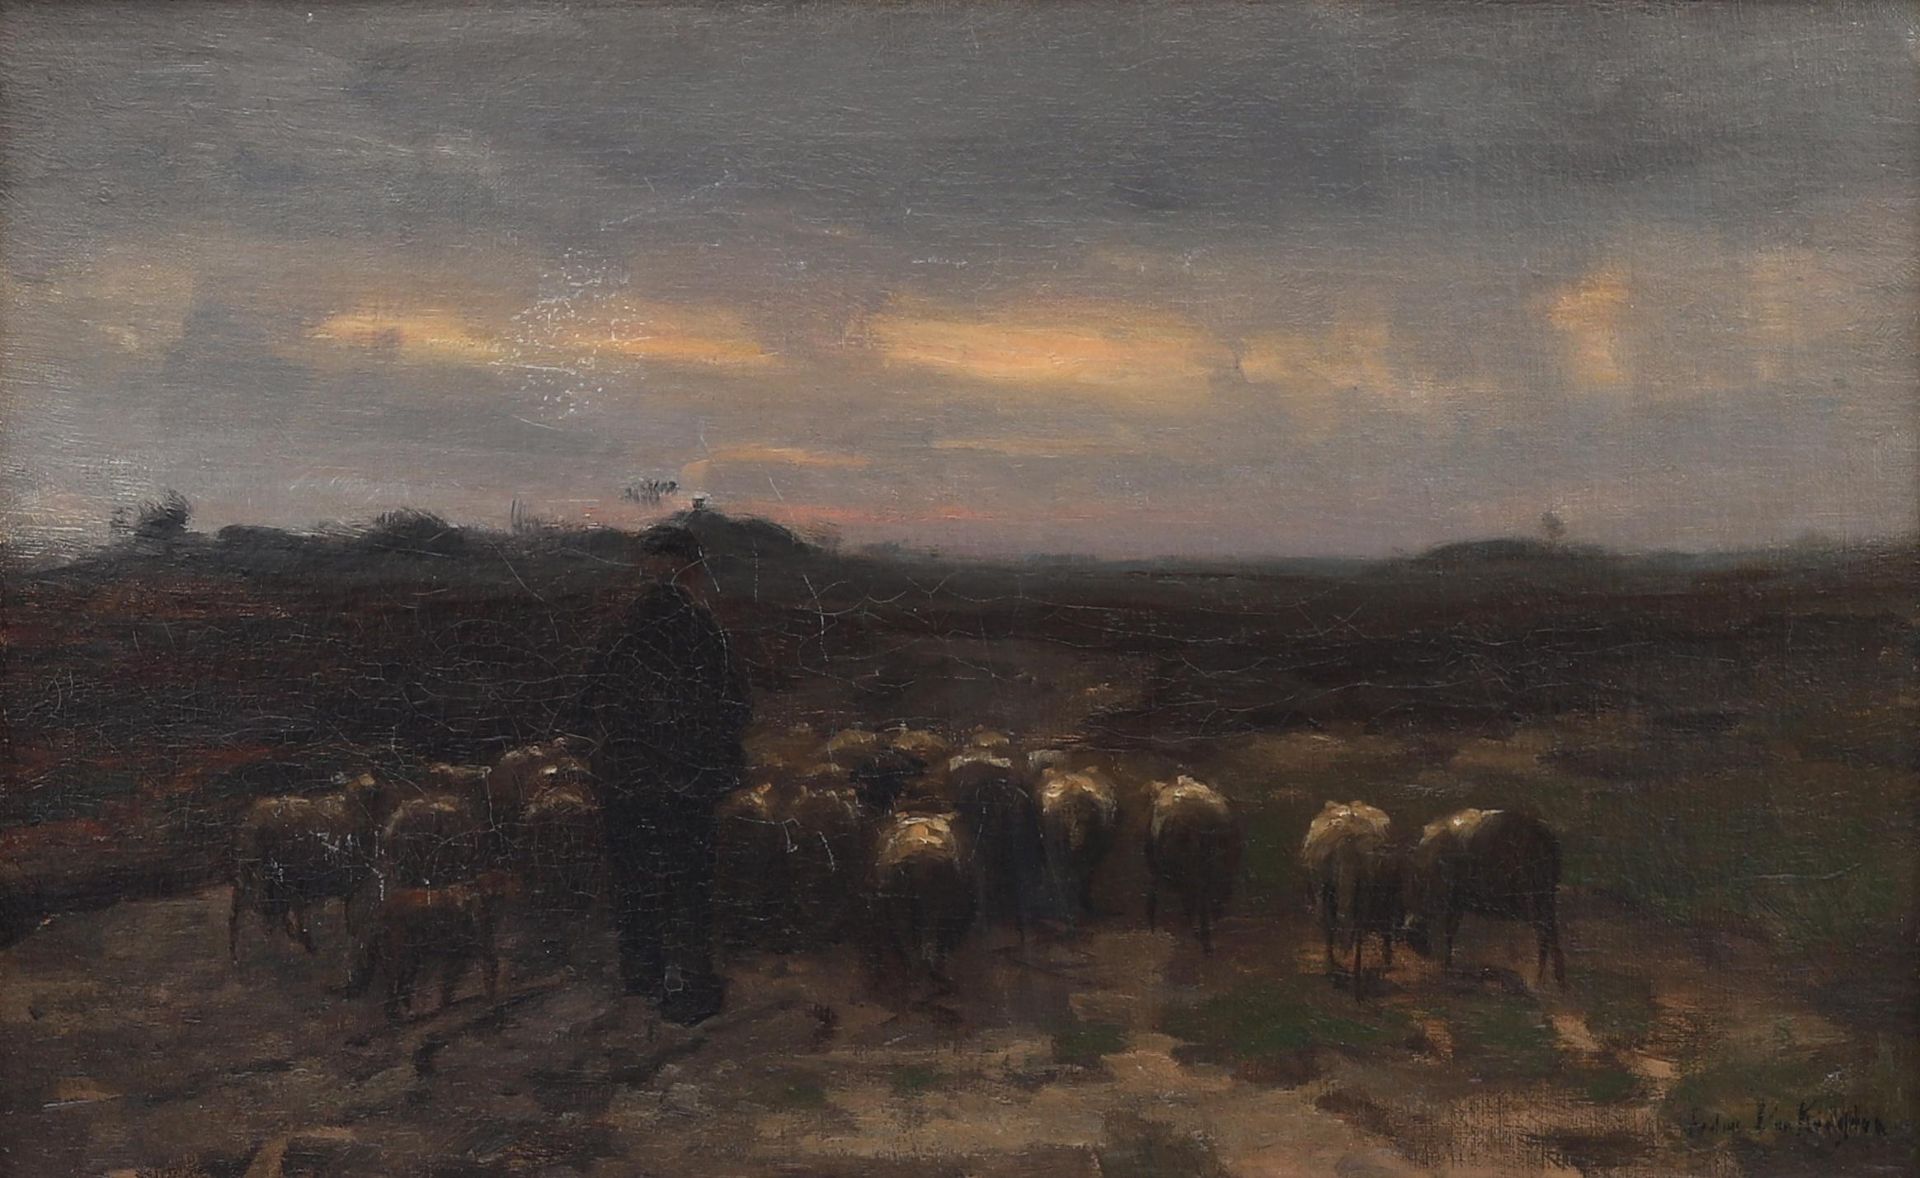 Fedor van Kregten (1871-1937) Untitled (Farmer with sheep), signed lower right 'Fedor van